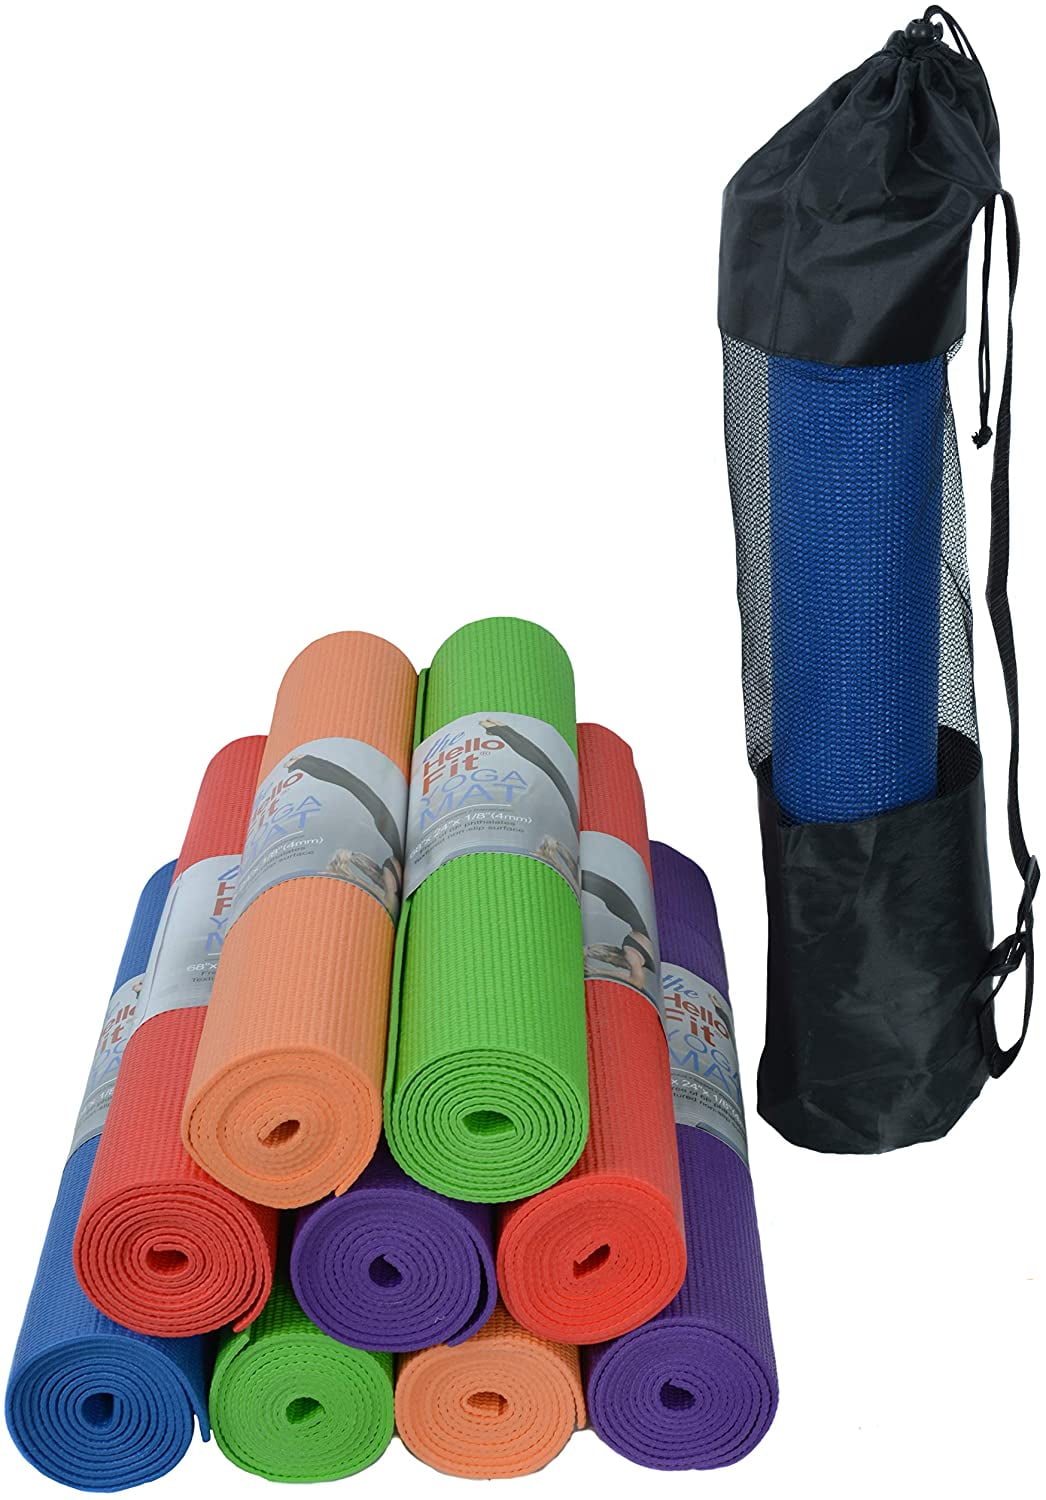 Portable Yoga Pilates Mat Mesh Case Bag Oxford Exercise Workout Carrier 67cm GN 